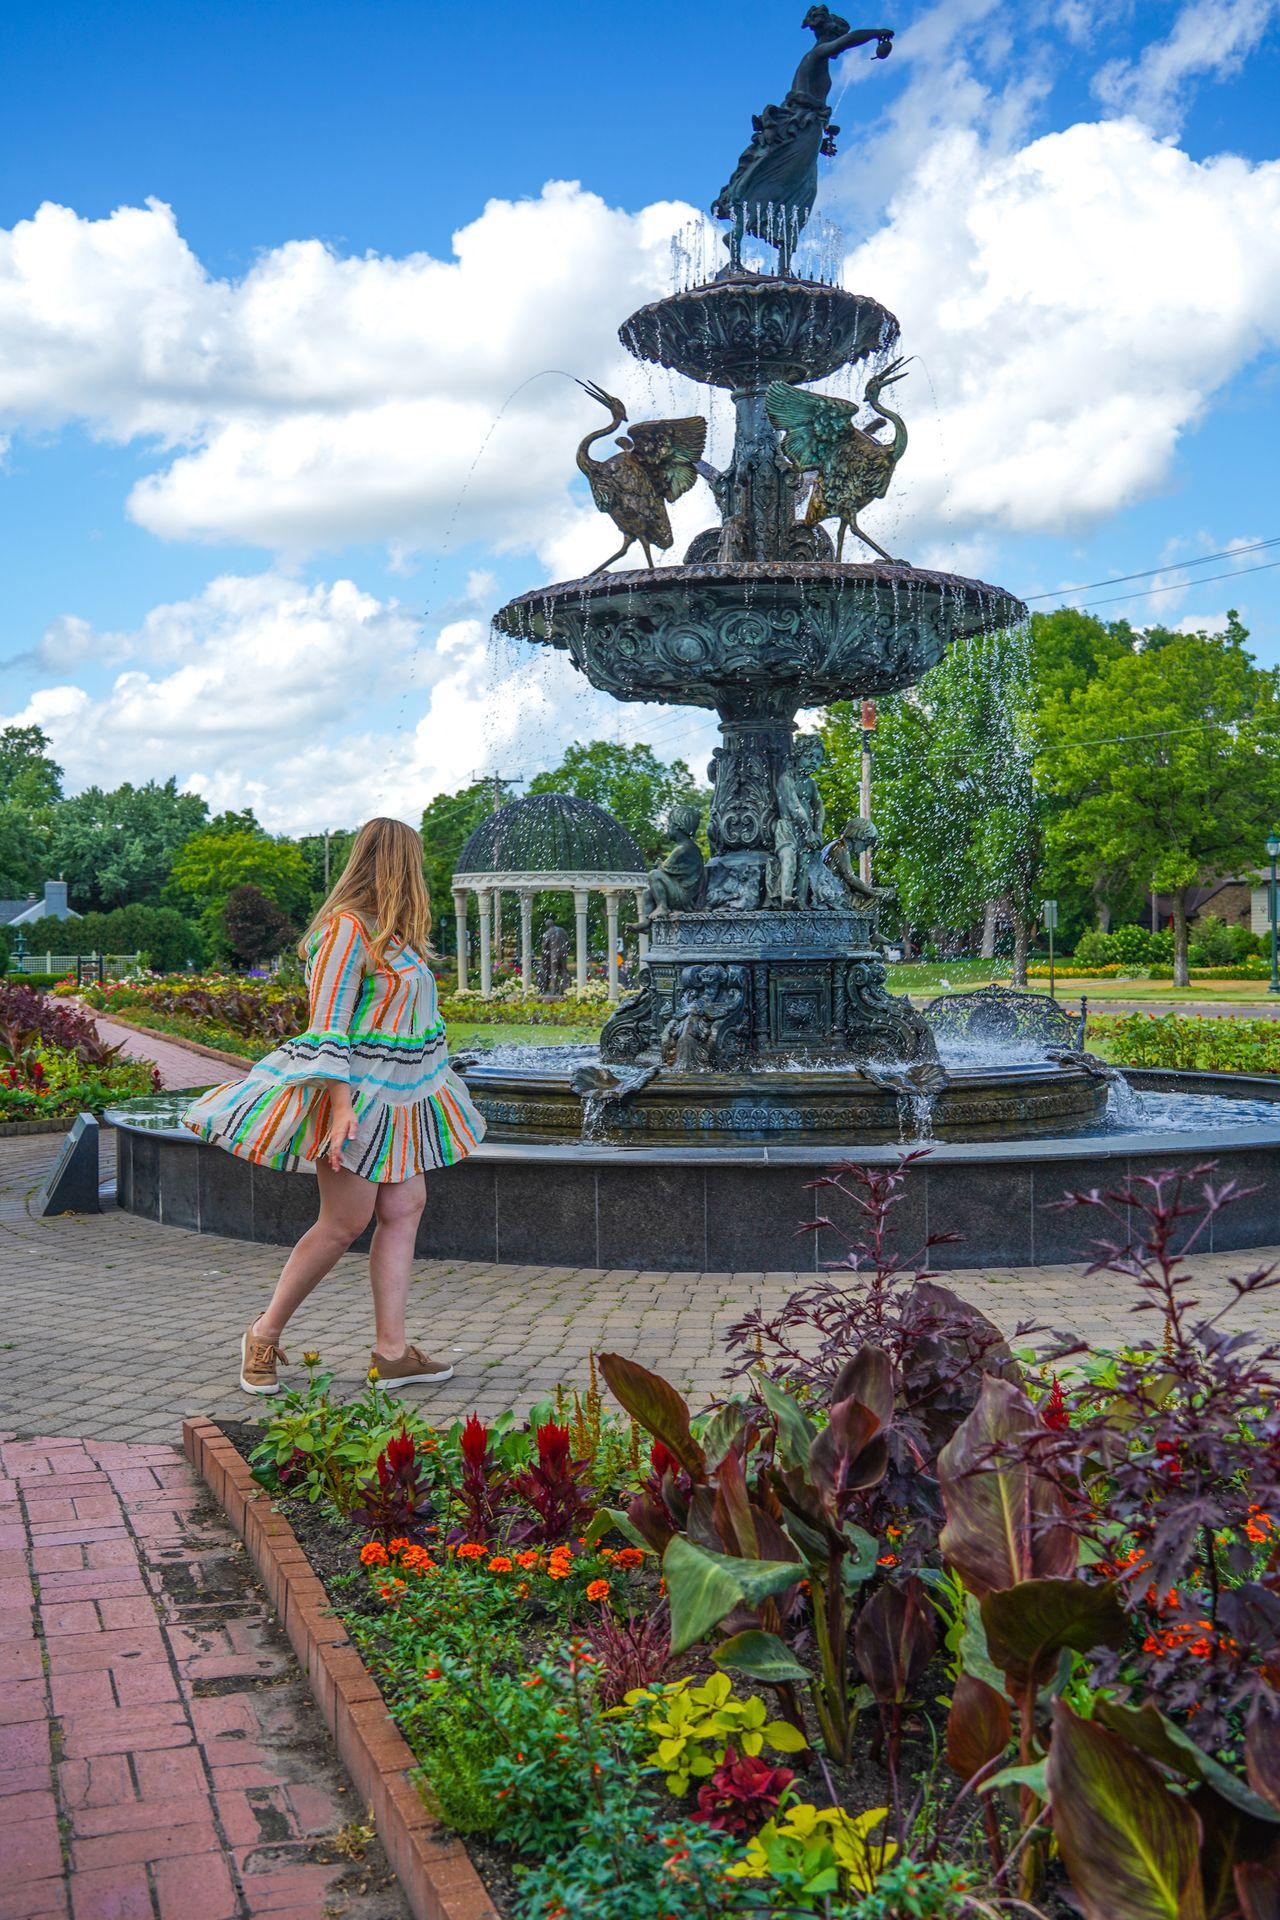 Lydia walking near a fountain at Munsinger Gardens